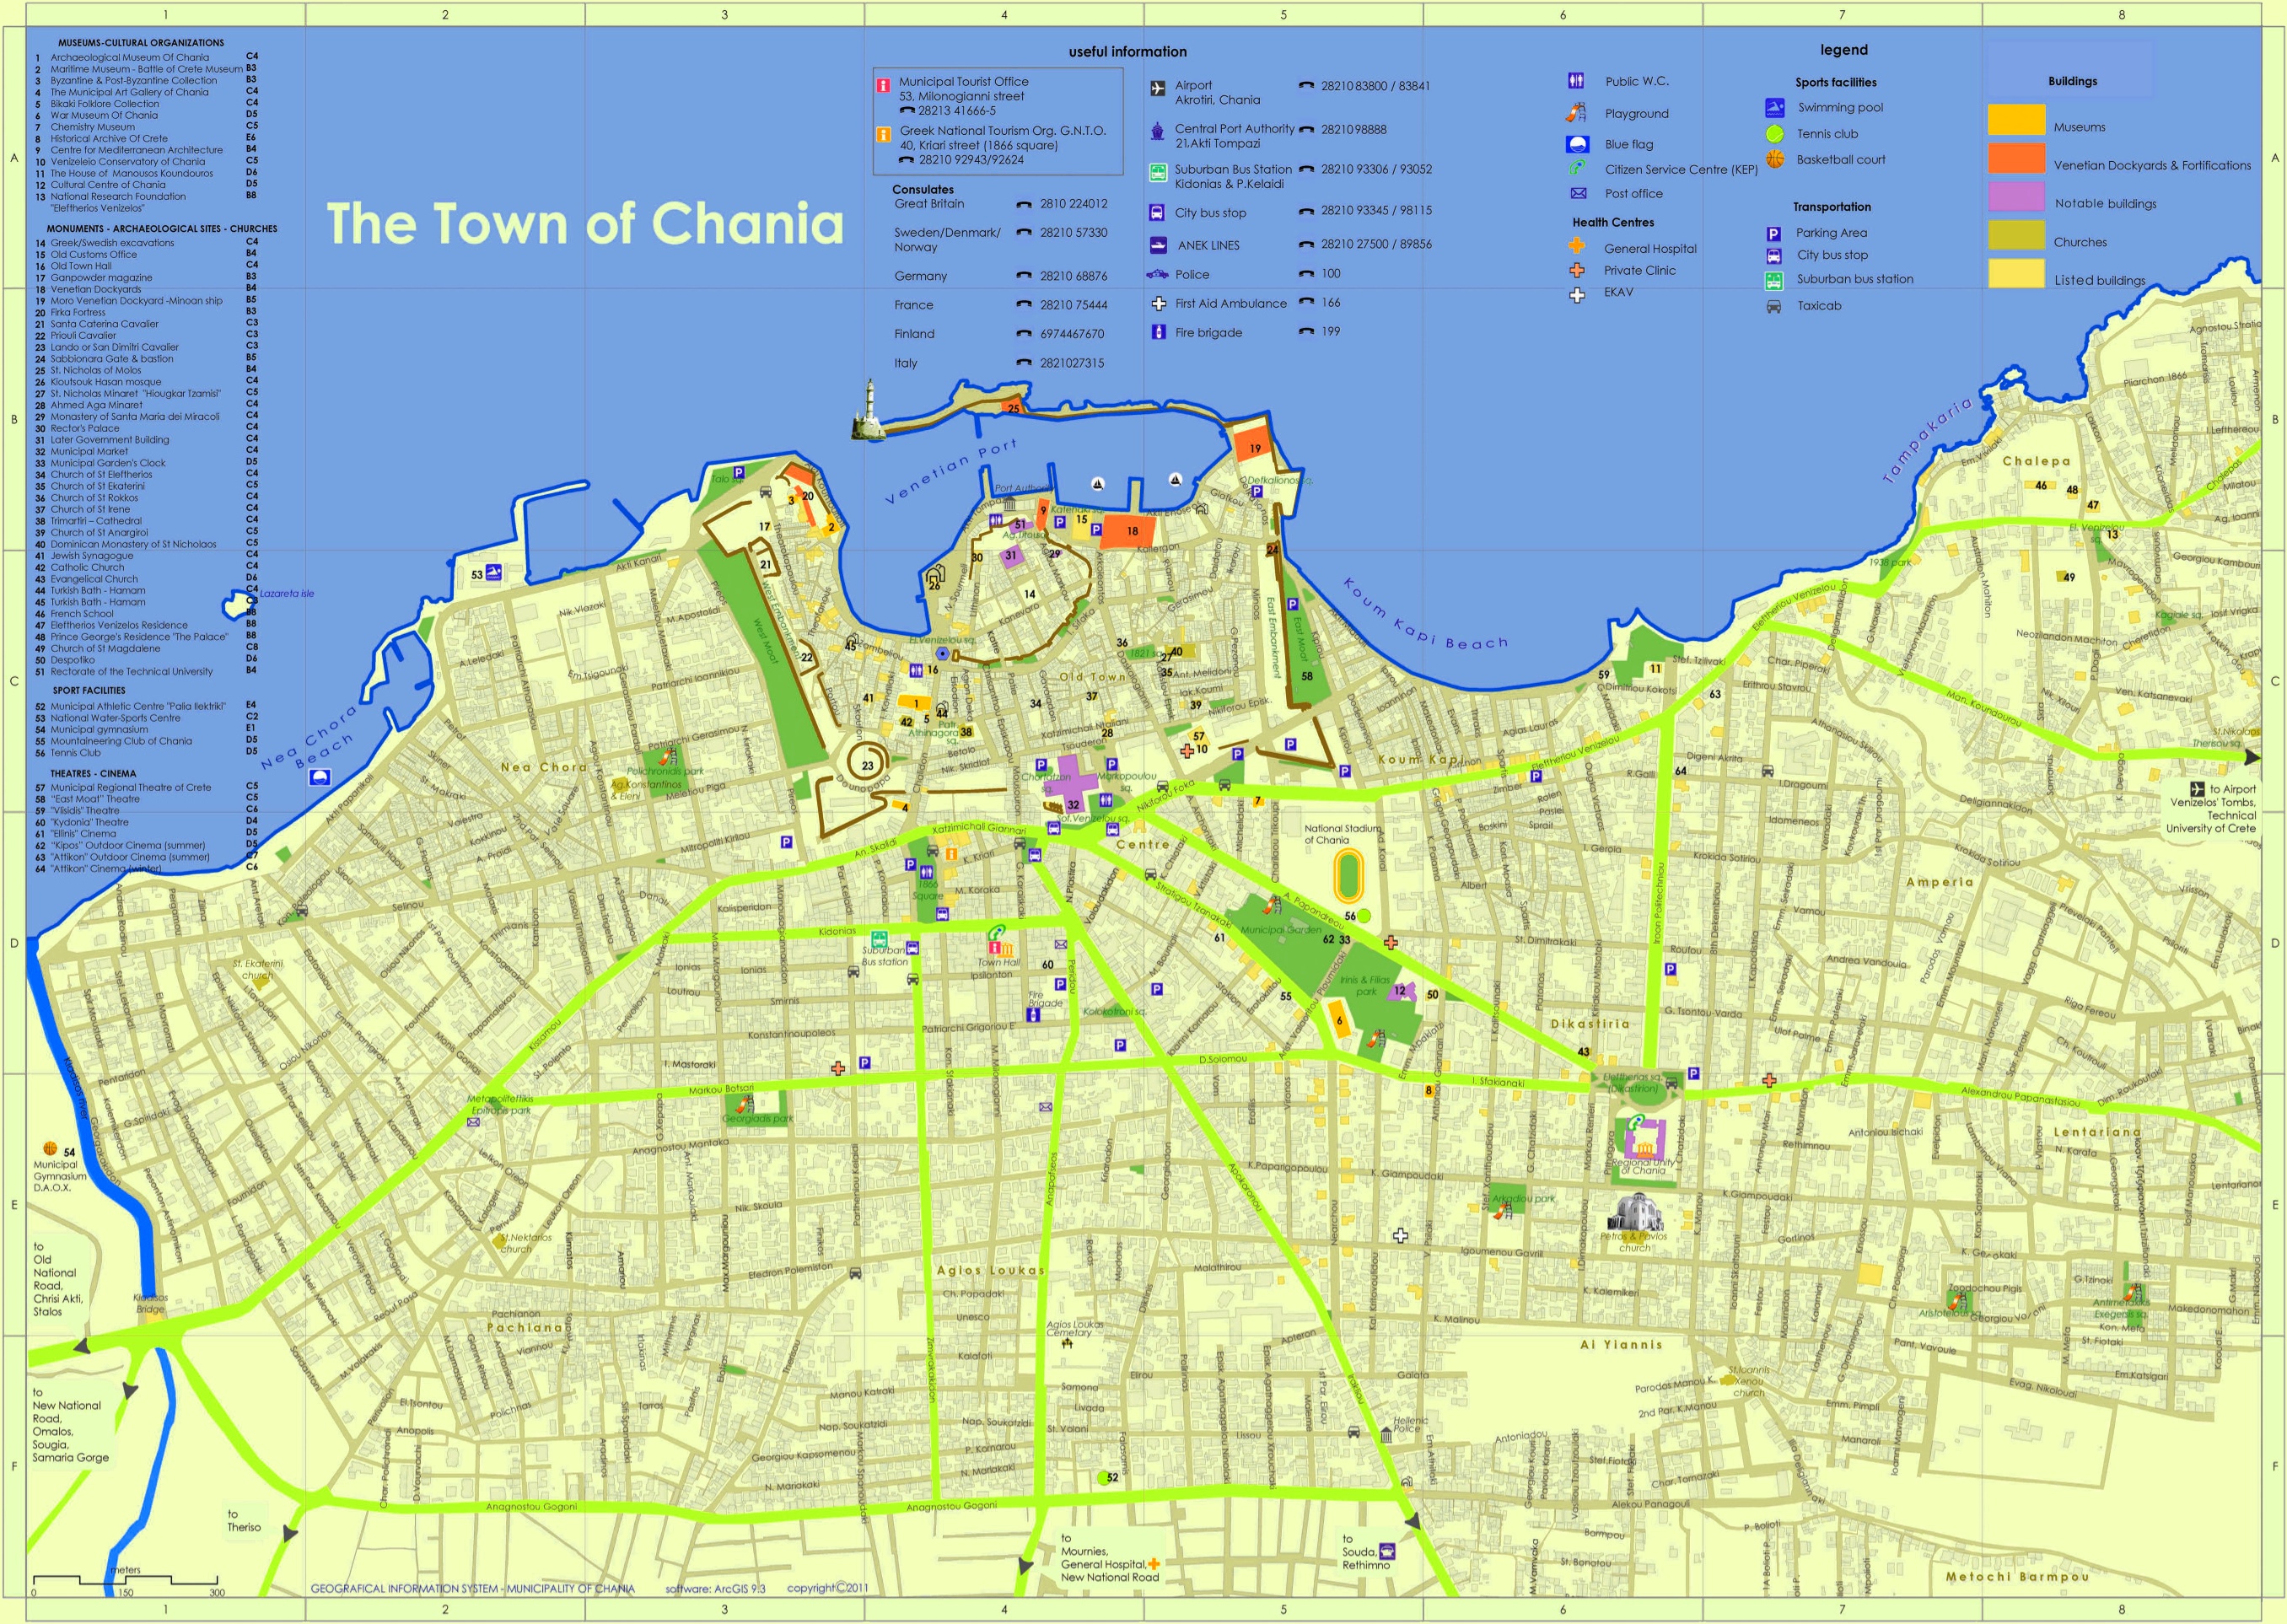 chania-tourist-map.jpg